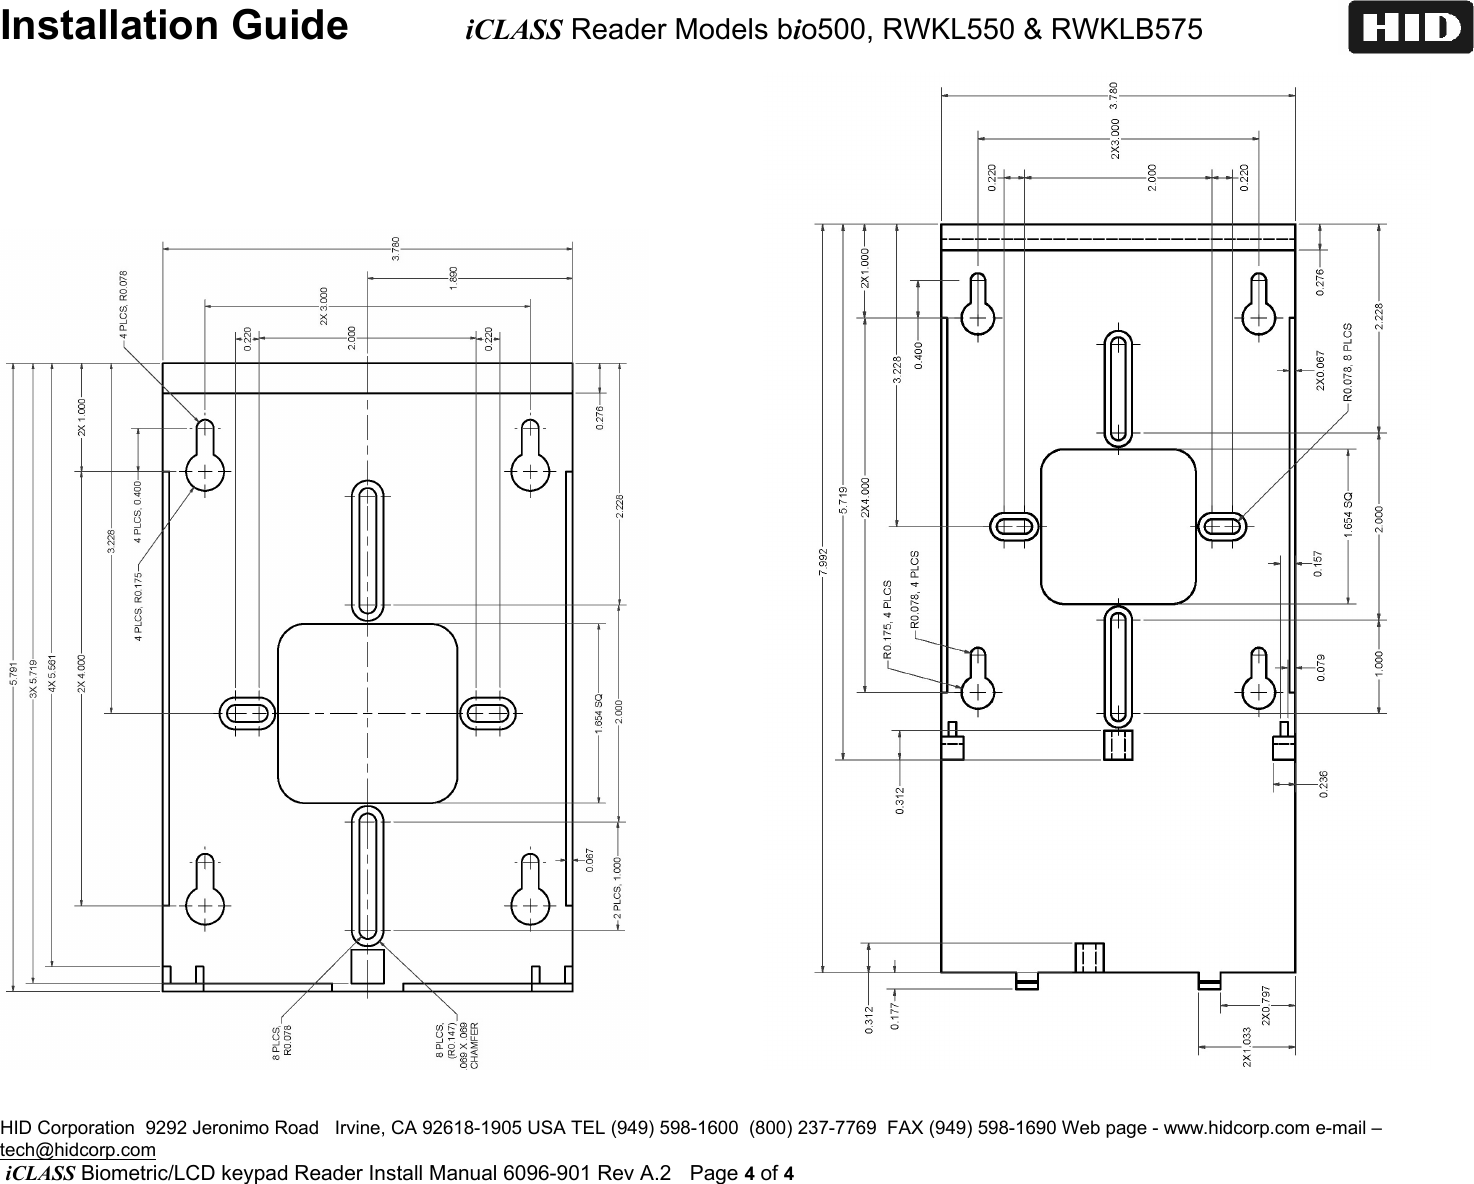 Installation Guide          iCLASS Reader Models bio500, RWKL550 &amp; RWKLB575   HID Corporation  9292 Jeronimo Road   Irvine, CA 92618-1905 USA TEL (949) 598-1600  (800) 237-7769  FAX (949) 598-1690 Web page - www.hidcorp.com e-mail – tech@hidcorp.com  iCLASS Biometric/LCD keypad Reader Install Manual 6096-901 Rev A.2  Page 4 of 4                               